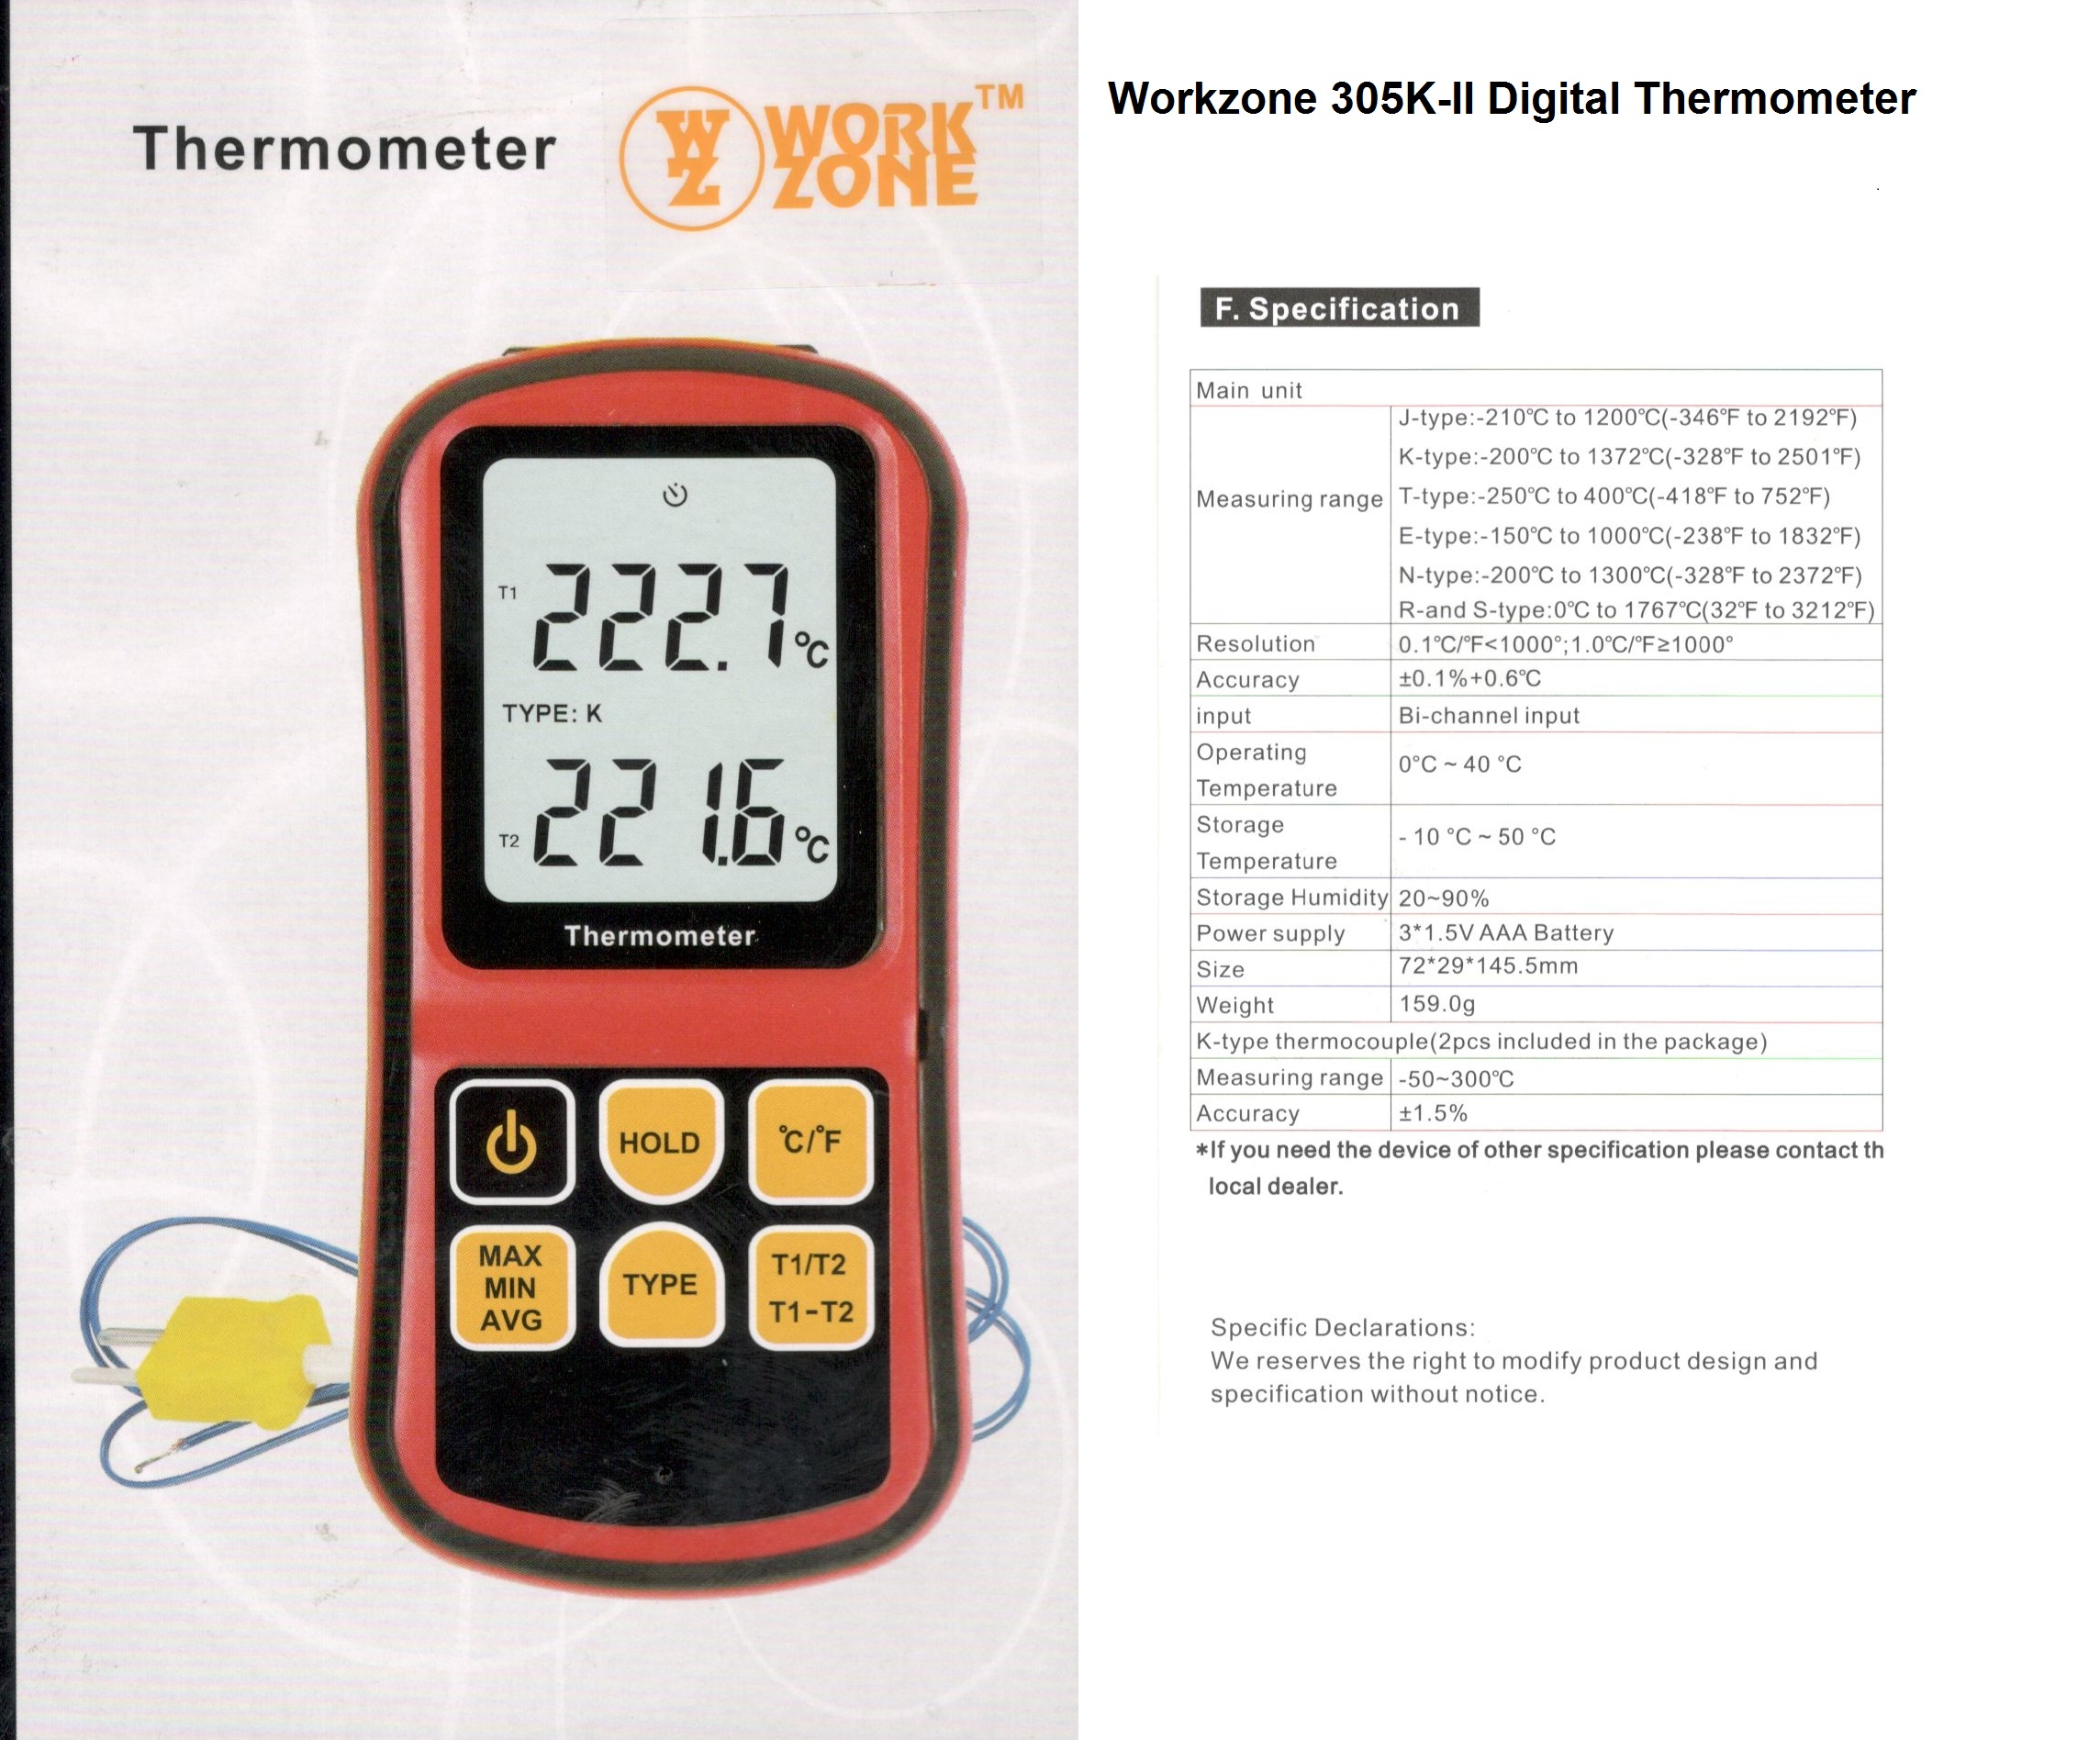 Workzone 305K-II Digital Thermometer